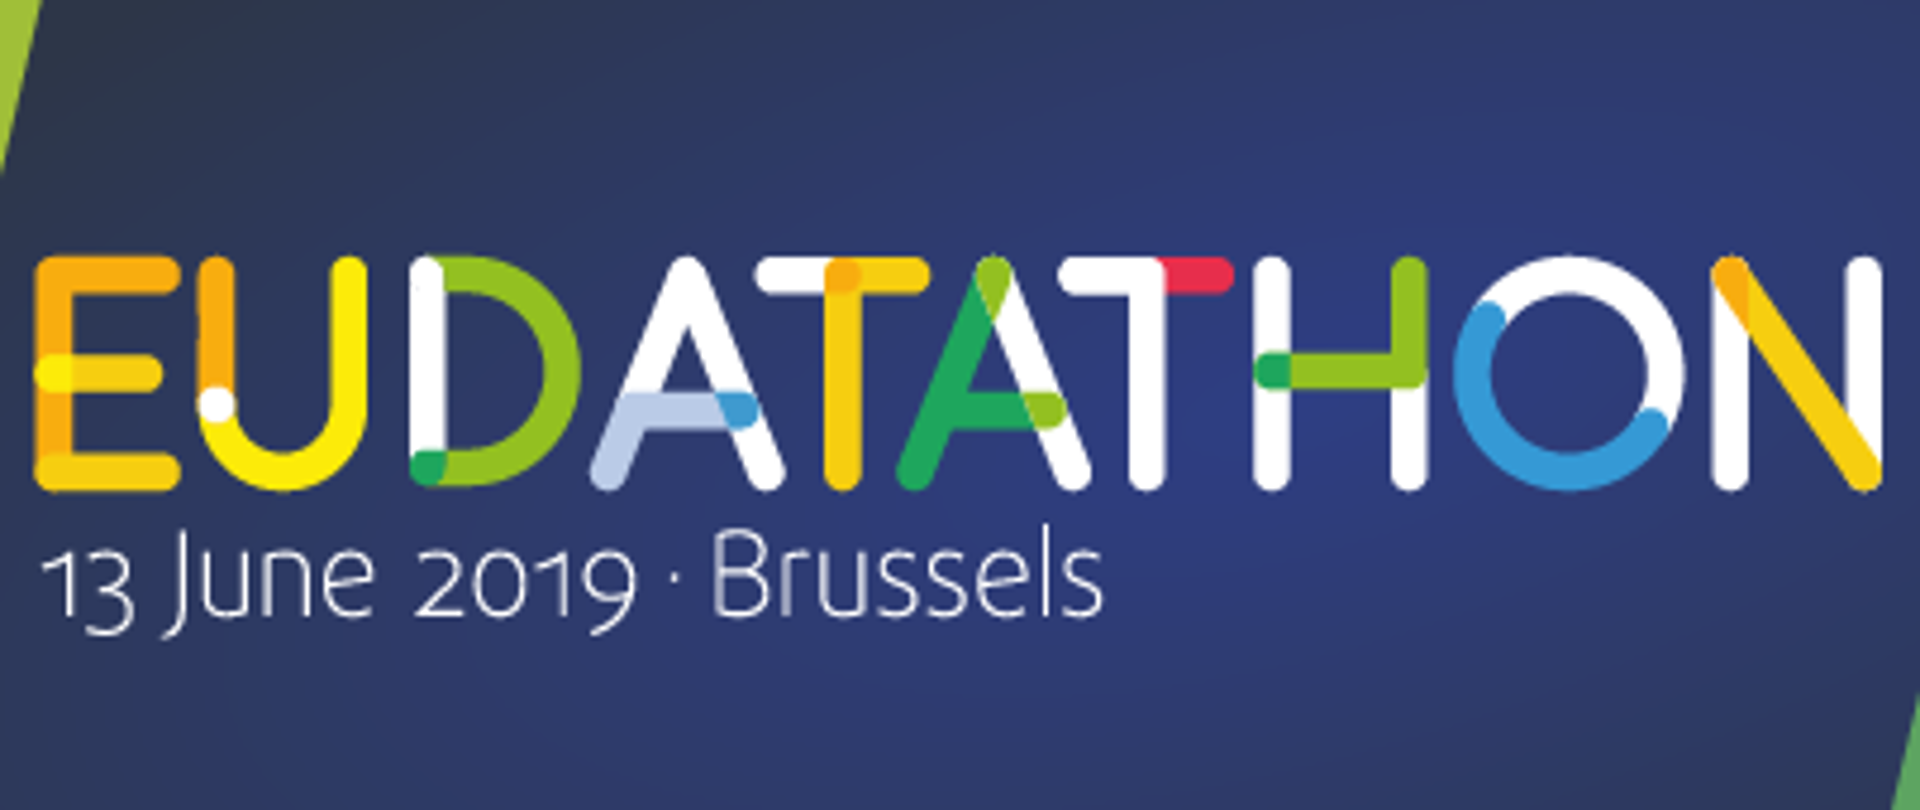 Napis na grafice: Eudatathathon 2019 - 13 czerwca 2019 w Brukseli